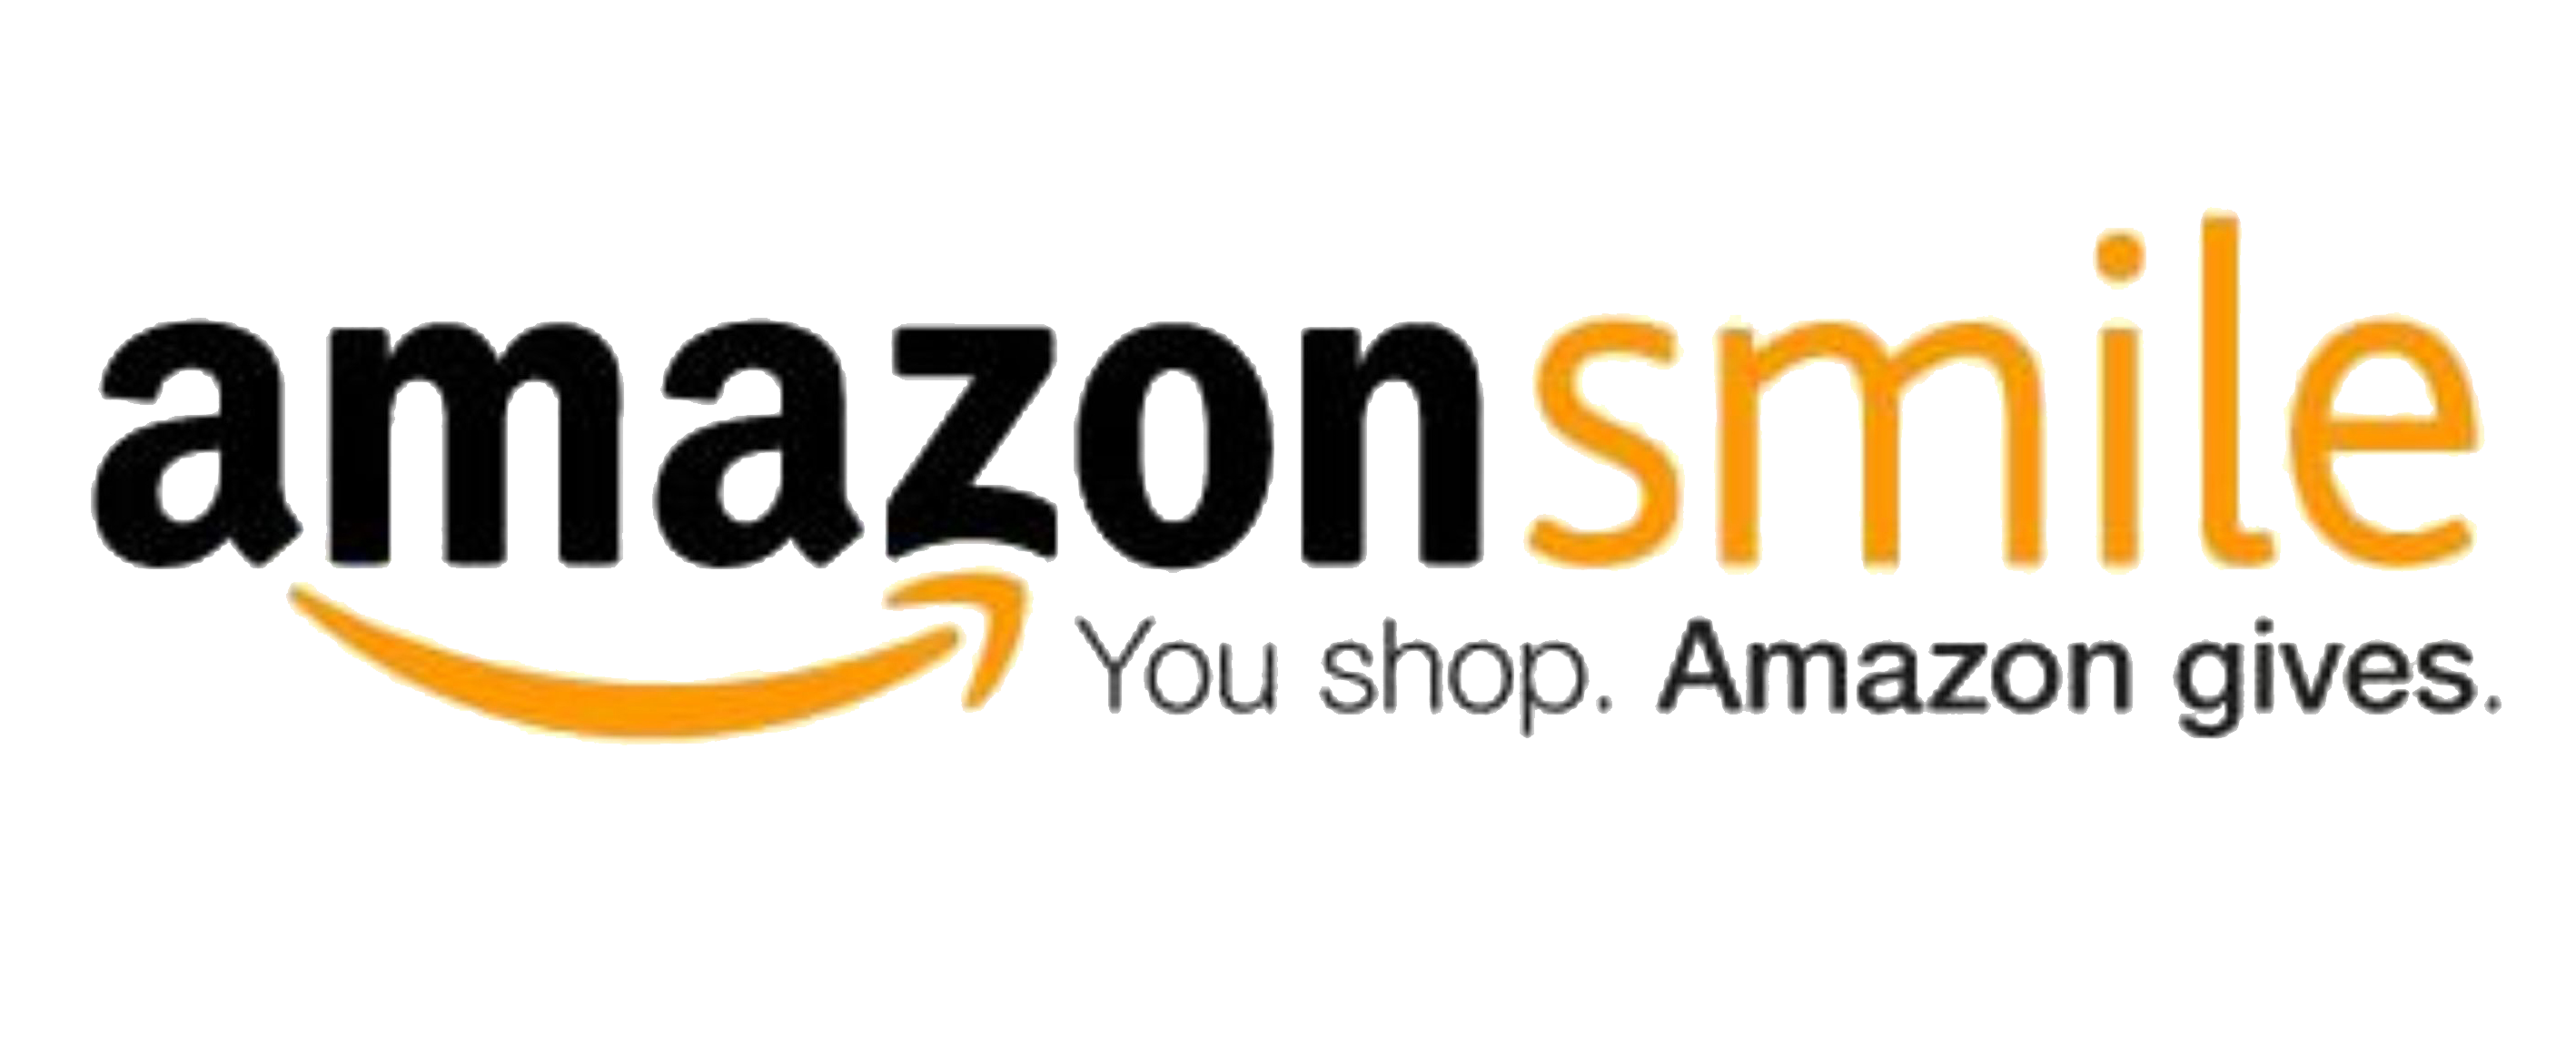 Amazon smile - You shop, Amazon gives.